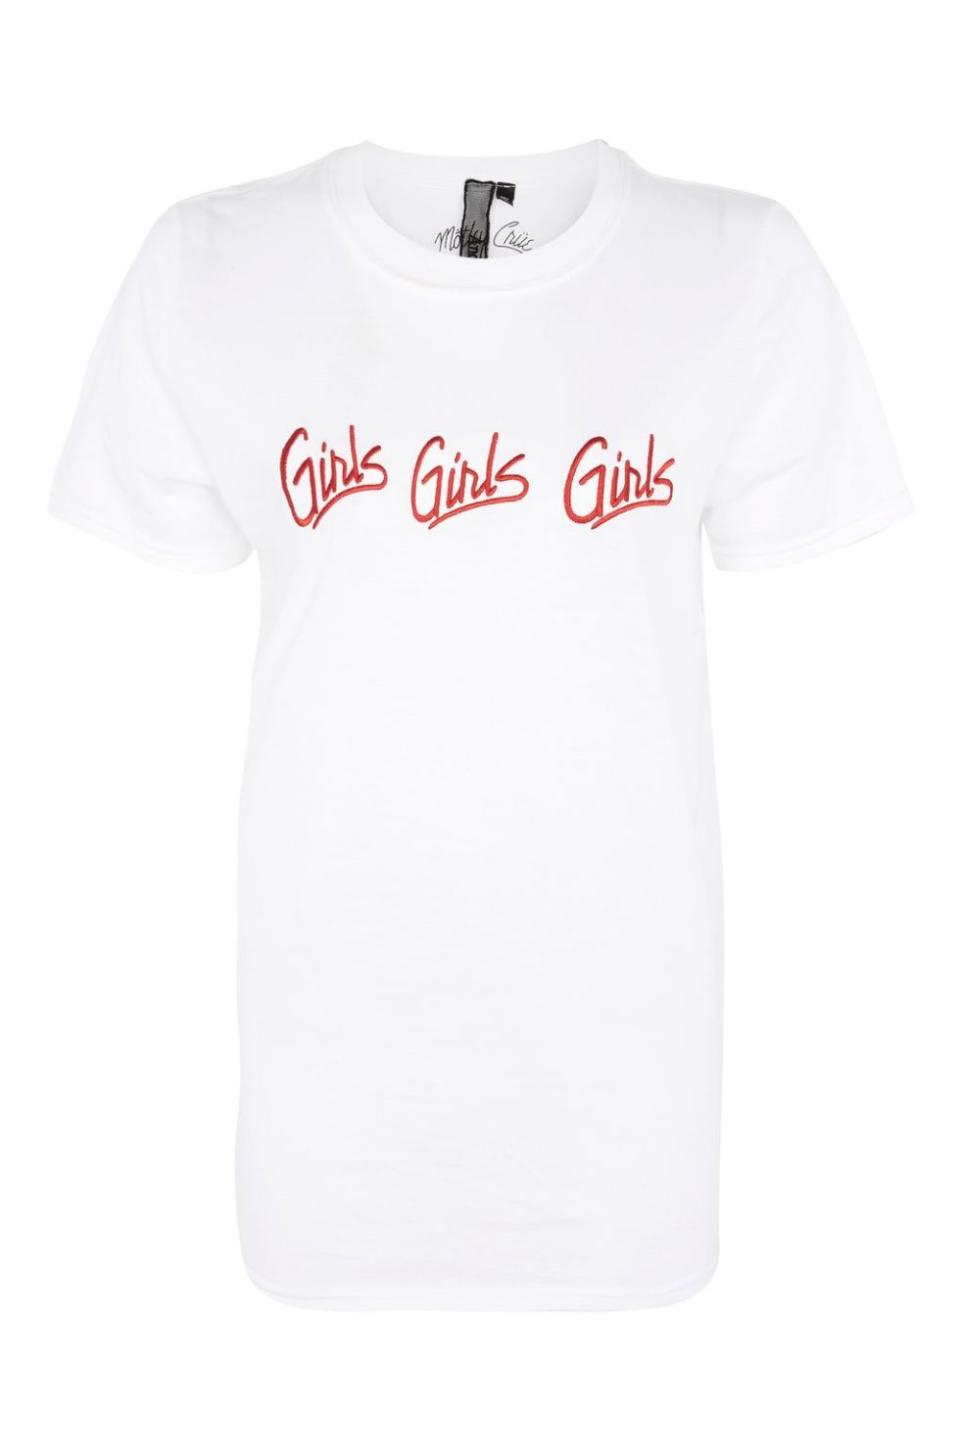 <p>Girls Girls Girls T-Shirt by And Finally. Available at <a rel="nofollow noopener" href="http://www.topshop.com/en/tsuk/product/girls-girls-girls-t-shirt-by-and-finally-6491263?geoip=noredirect&cmpid=ppc_pla_UK_ip&utm_medium=cpc&tsrc=vdna&istCompanyId=38aa0d7f-6514-4cb3-bbdc-df0d32d48b7f&istItemId=xrmawrrrpl&istBid=tztx&gclid=EAIaIQobChMIxvSxyvi61QIVlBaPCh0SEgYCEAQYBSABEgLONPD_BwE&gclsrc=aw.ds" target="_blank" data-ylk="slk:Topshop - £25;elm:context_link;itc:0;sec:content-canvas" class="link ">Topshop - £25</a></p>